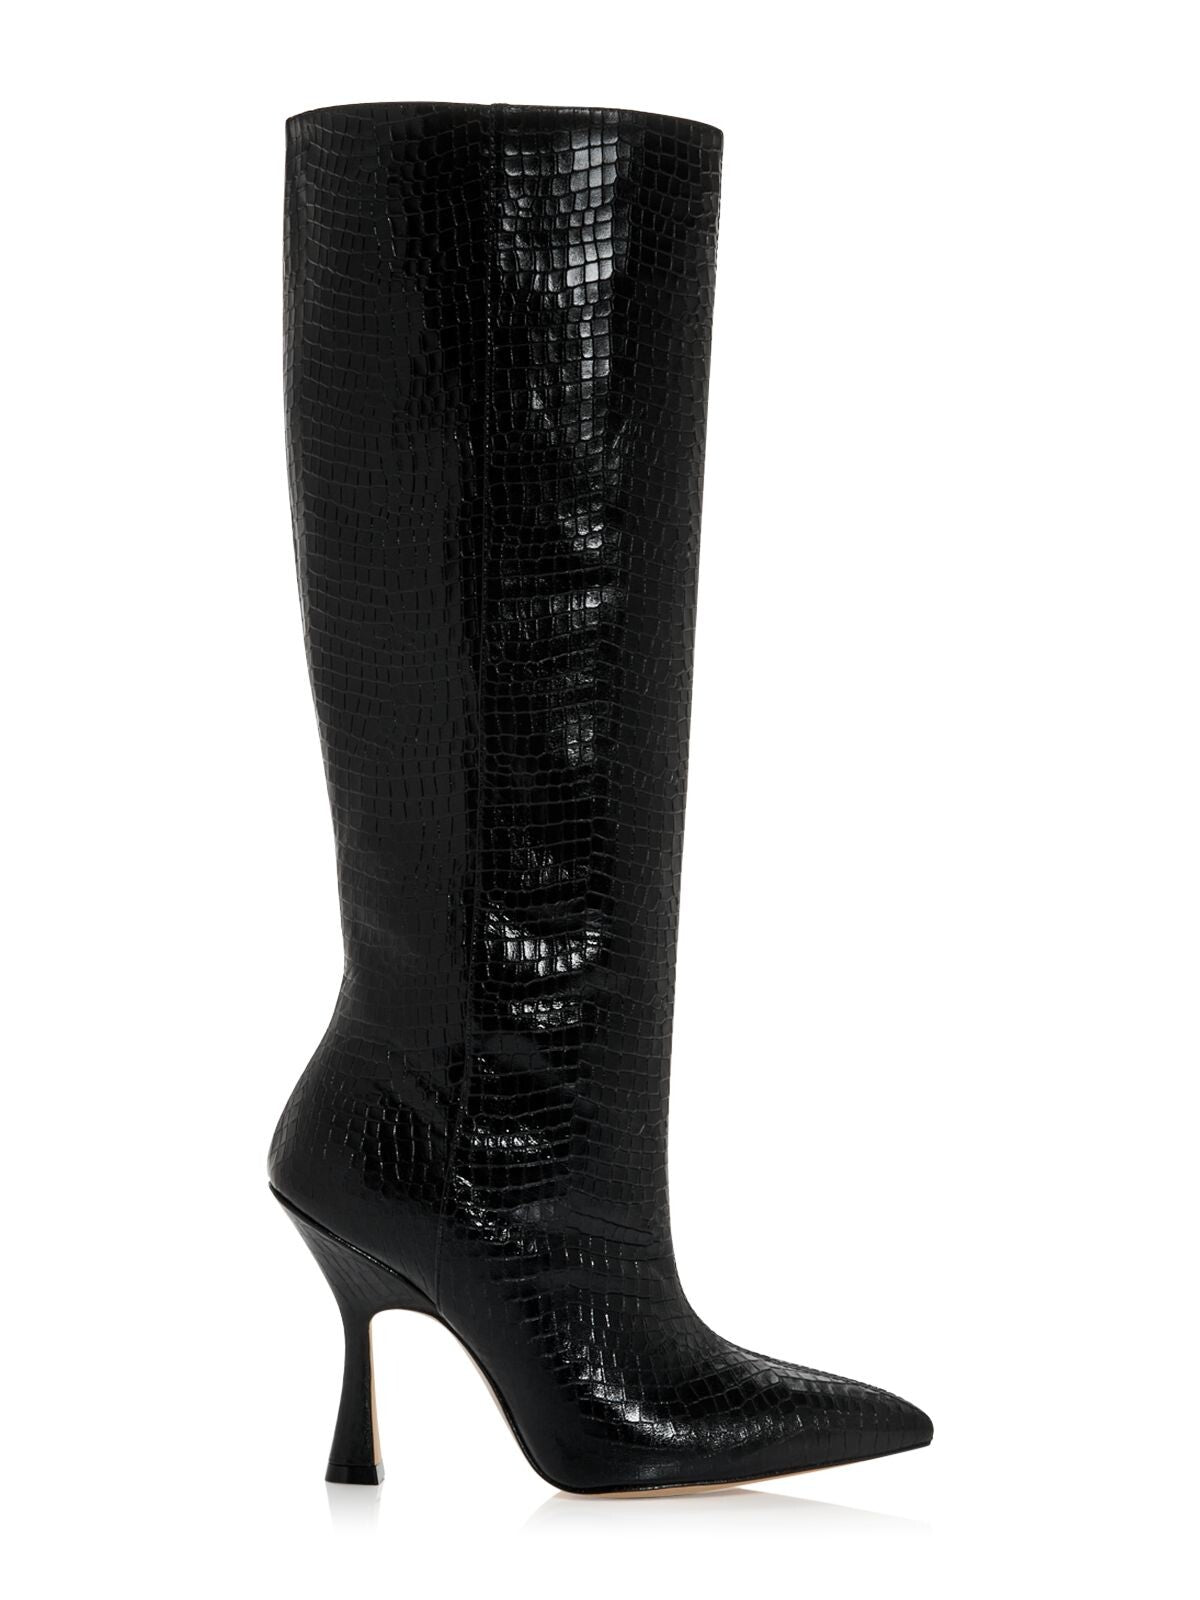 STUART WEITZMAN Womens Black Croco Print Padded Parton Pointed Toe Kitten Heel Leather Dress Boots 7 M